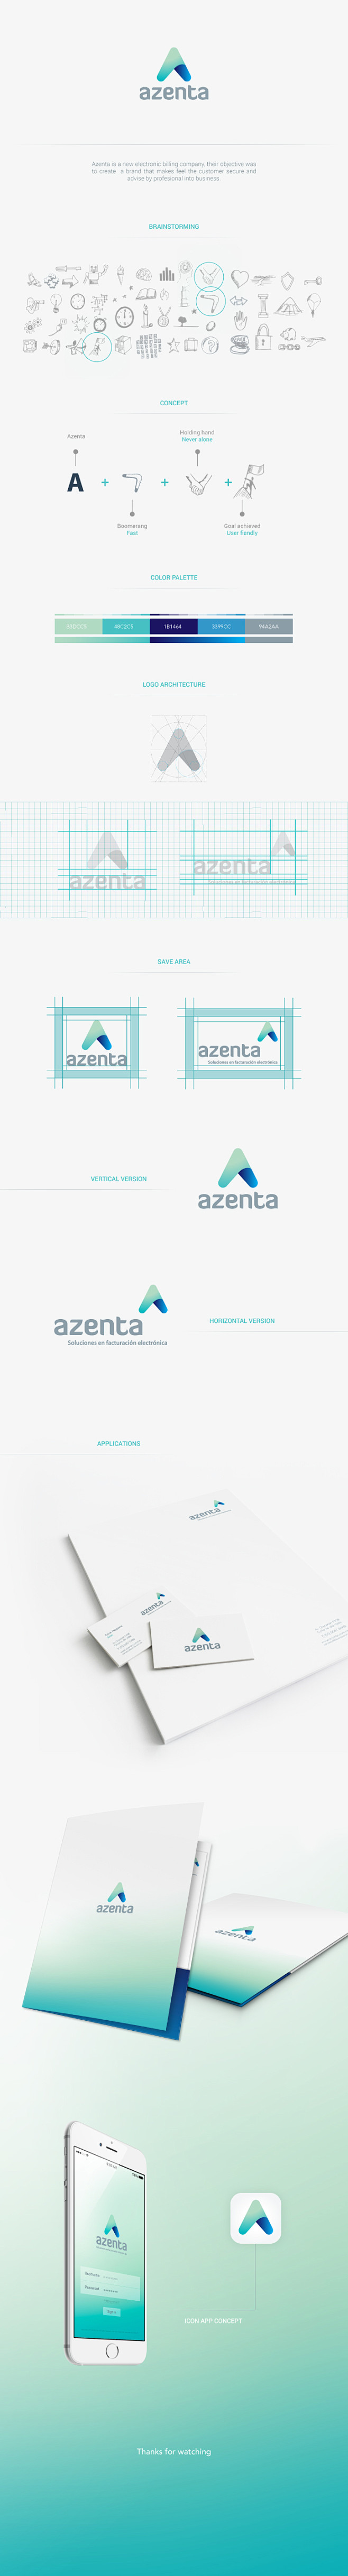 Azenta : Azenta is a...